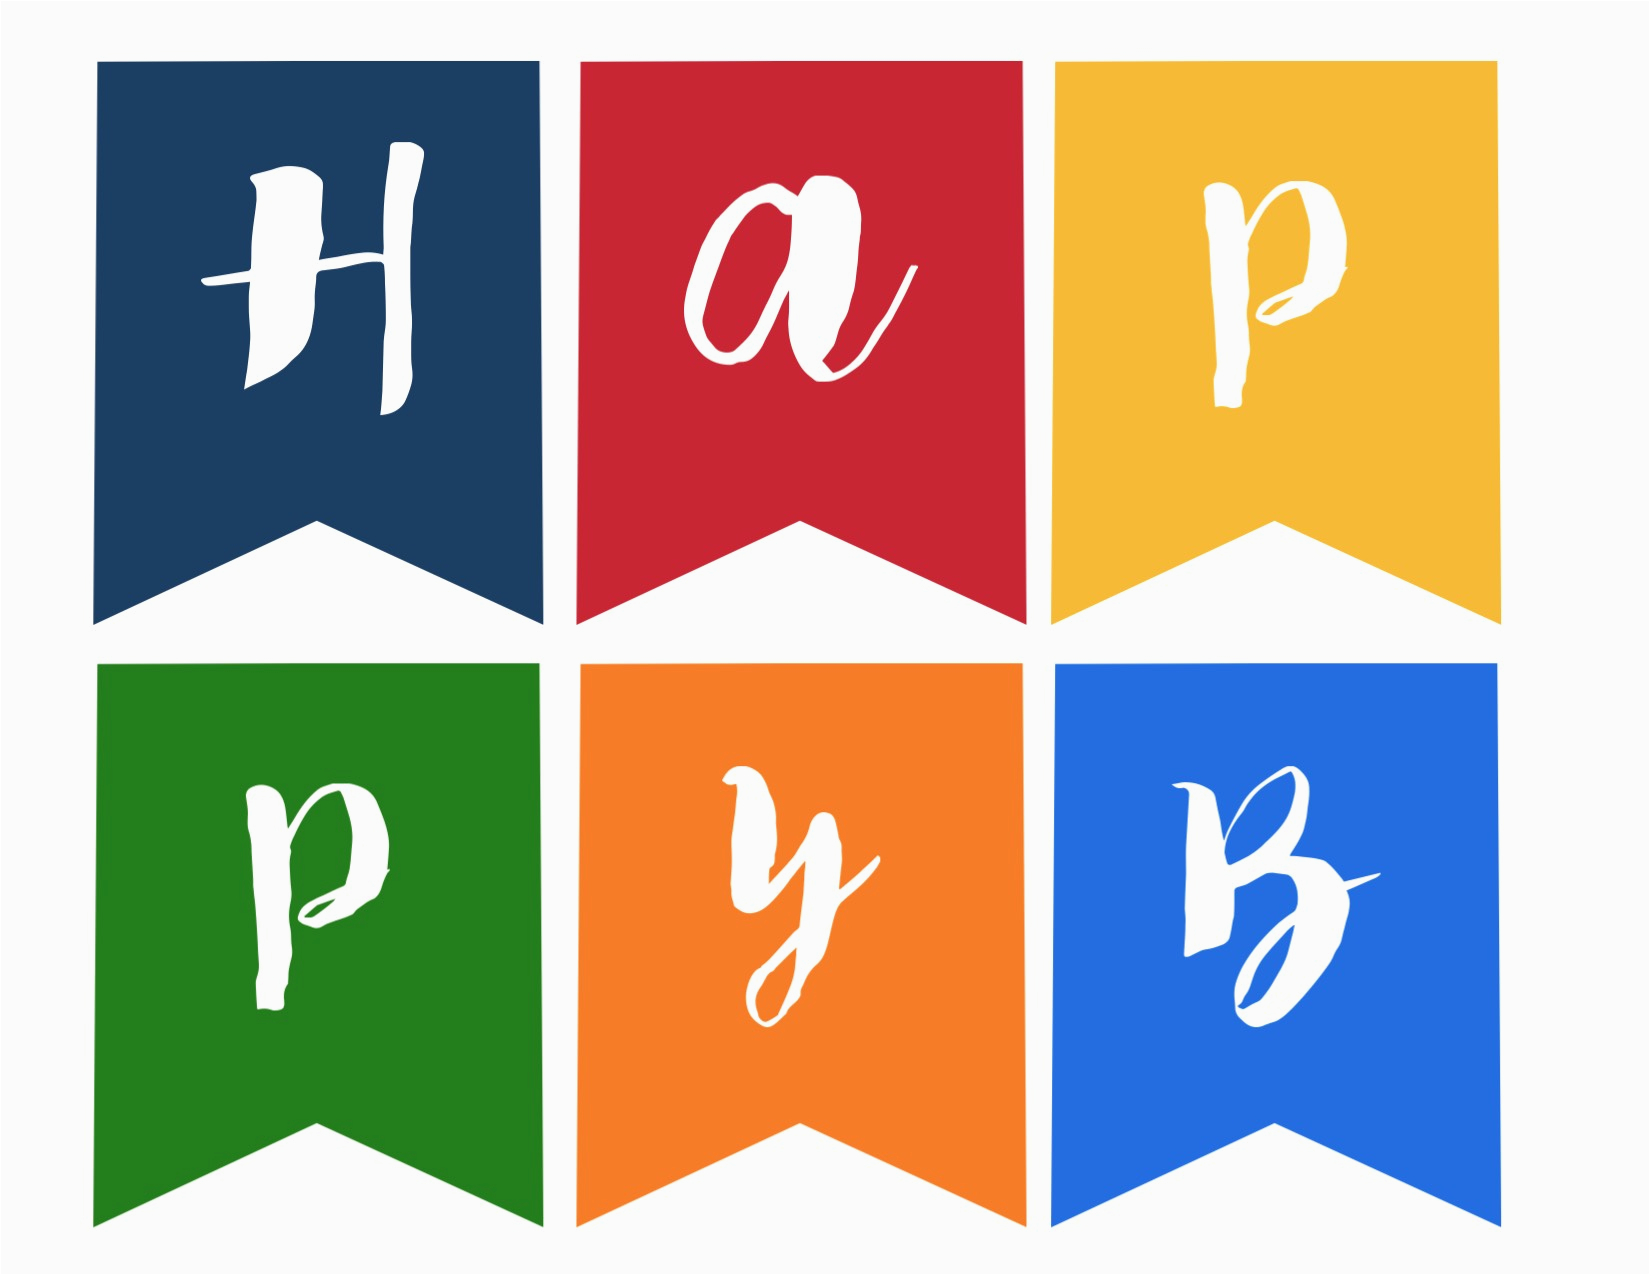 happy birthday banner free printable